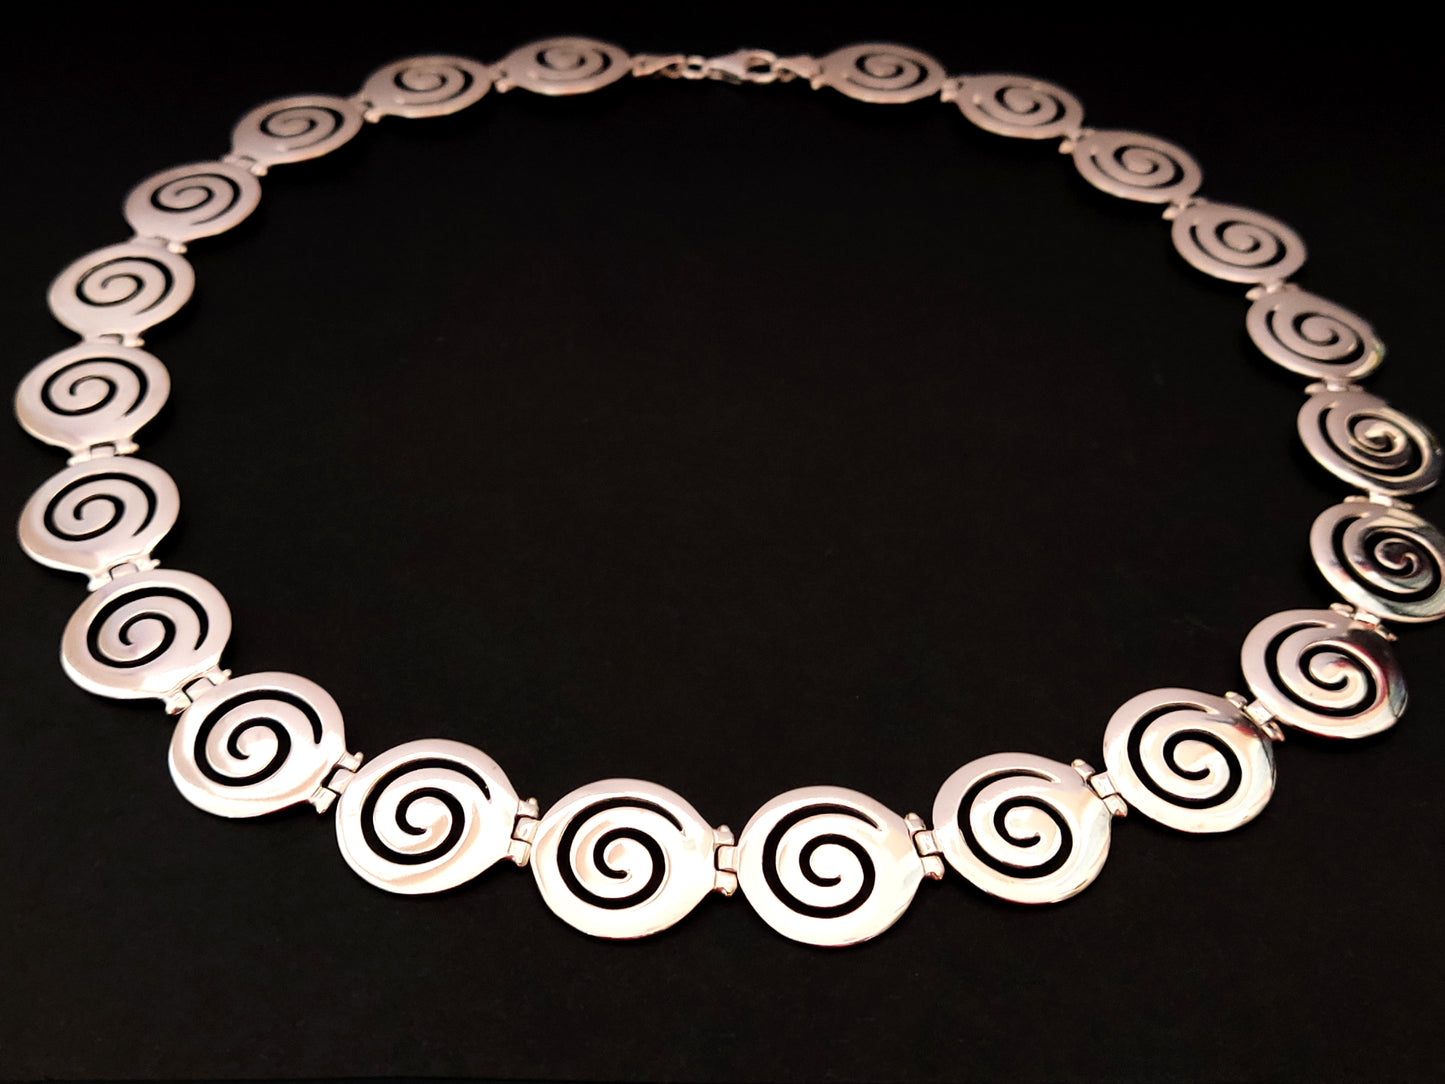 Greek silver necklace with spiral design measuring 19mm width.